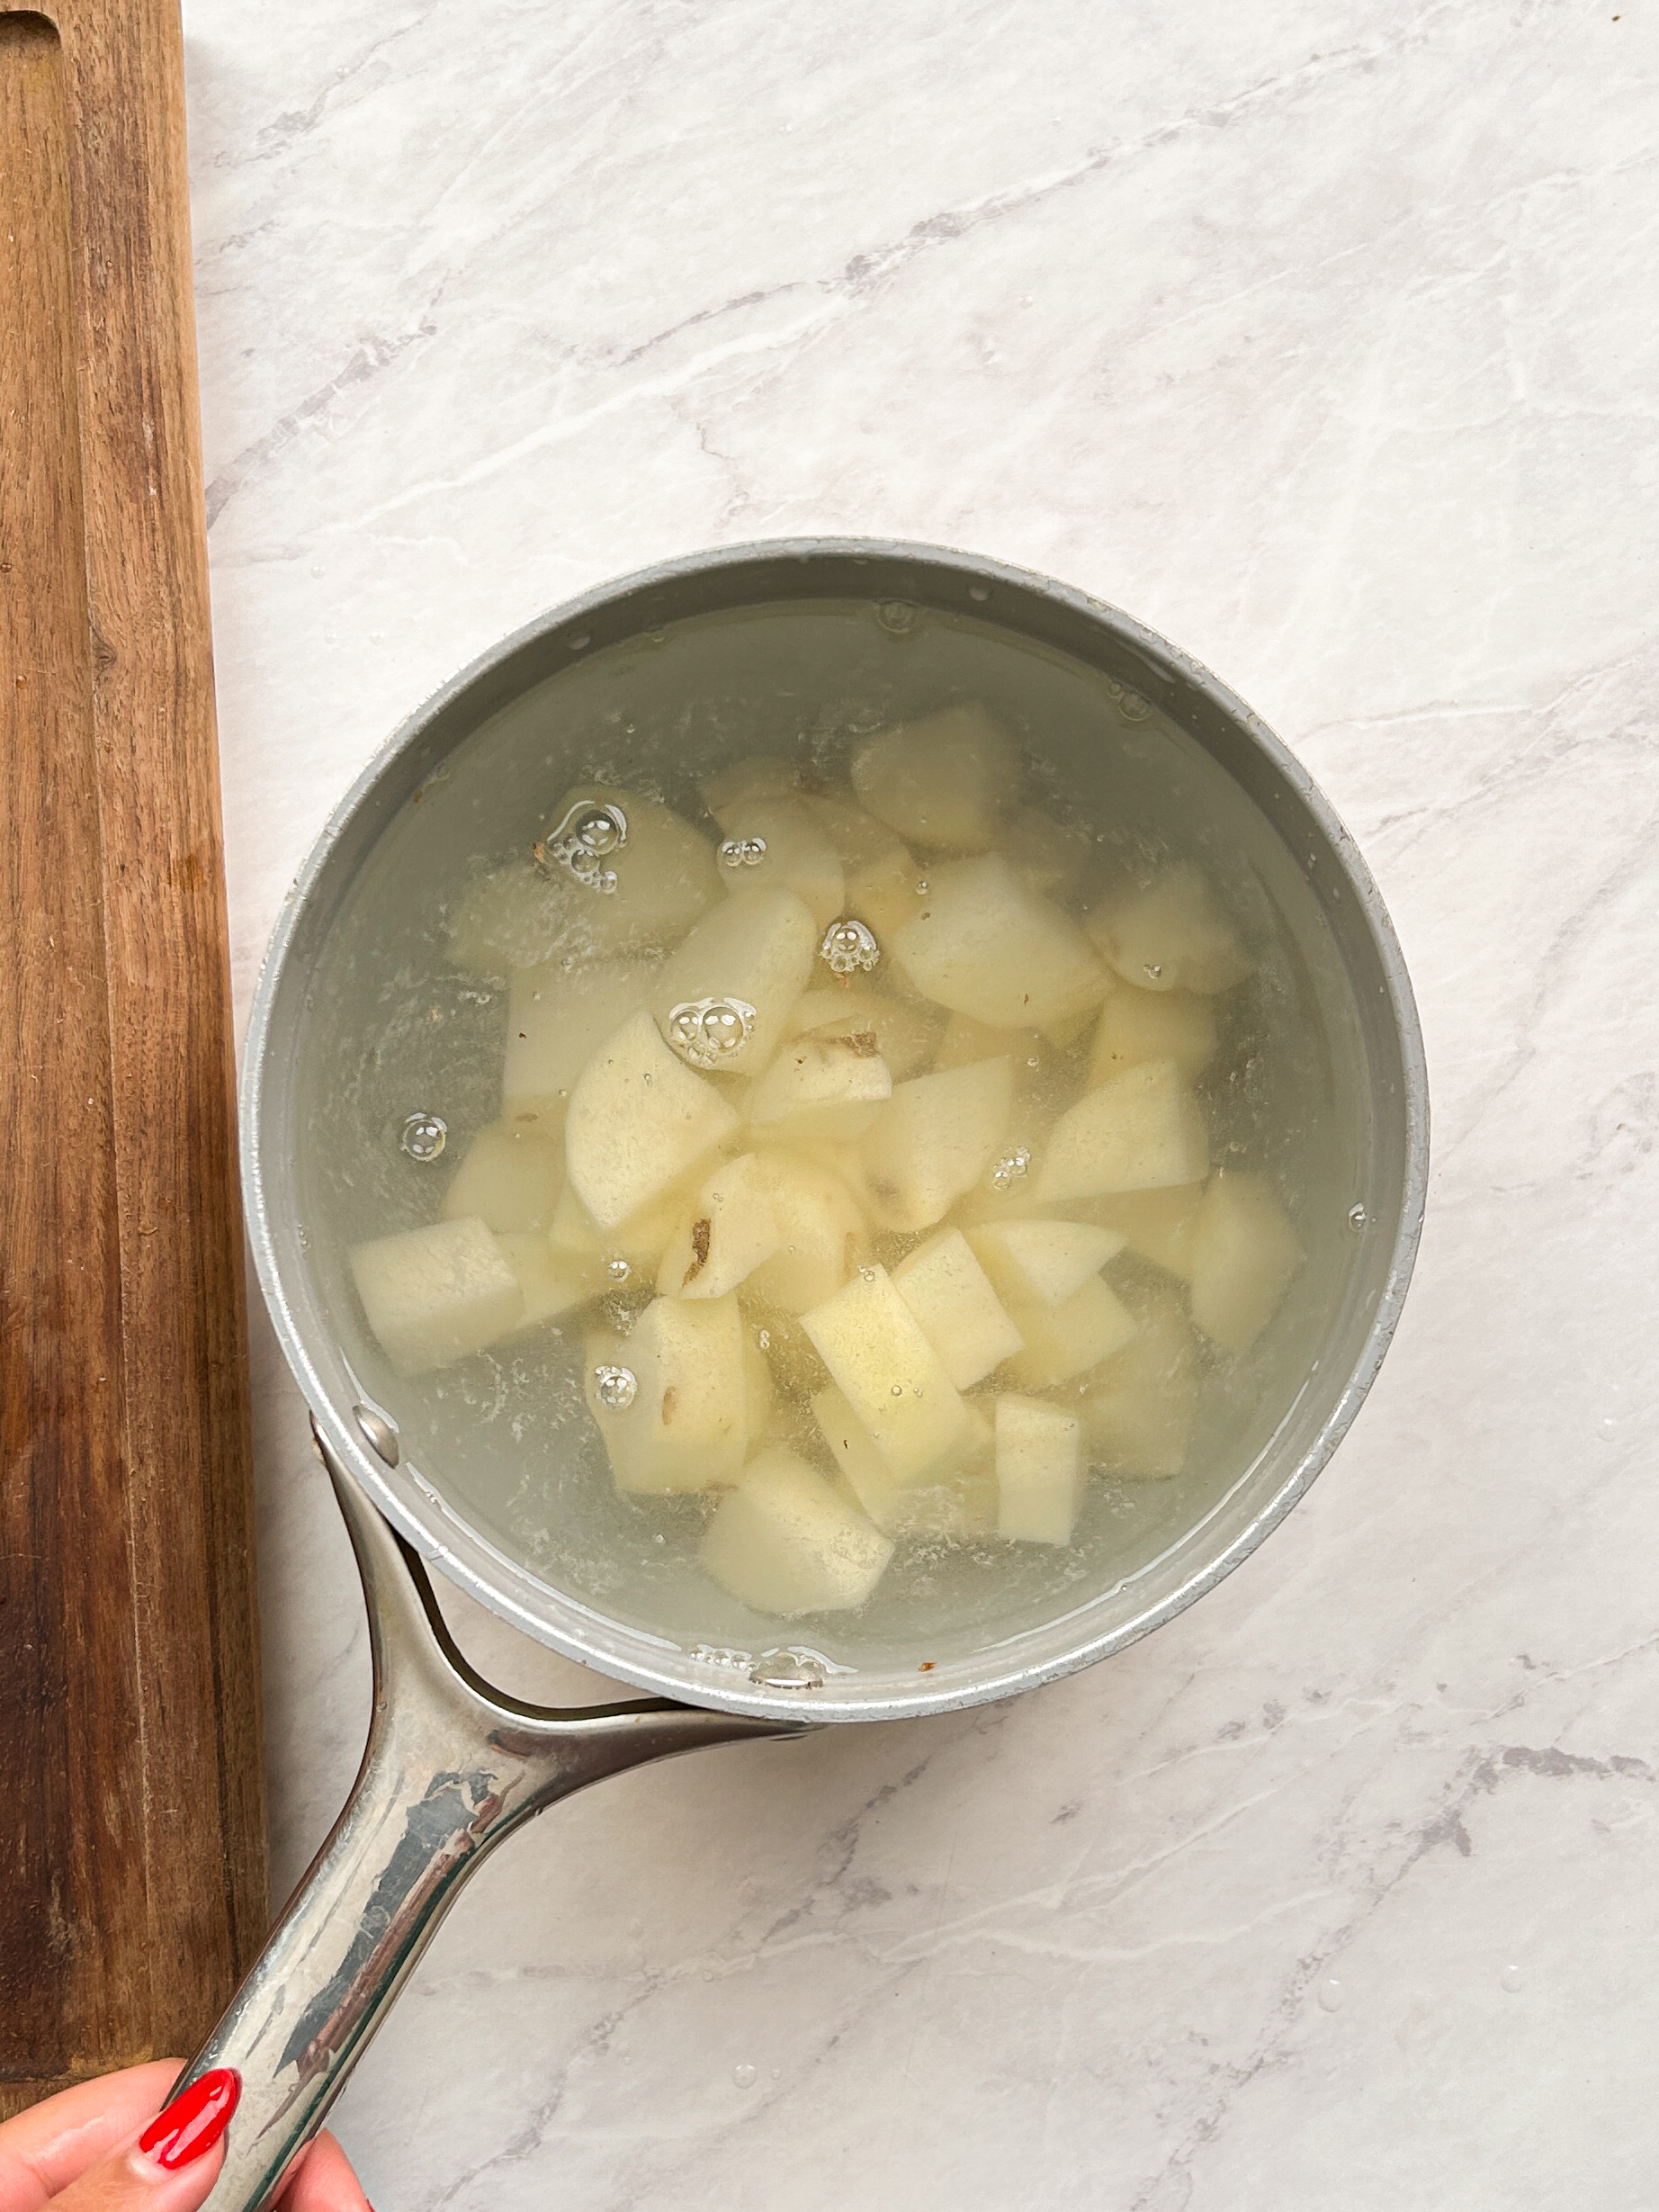 cubed potatoes in water in a saucepan